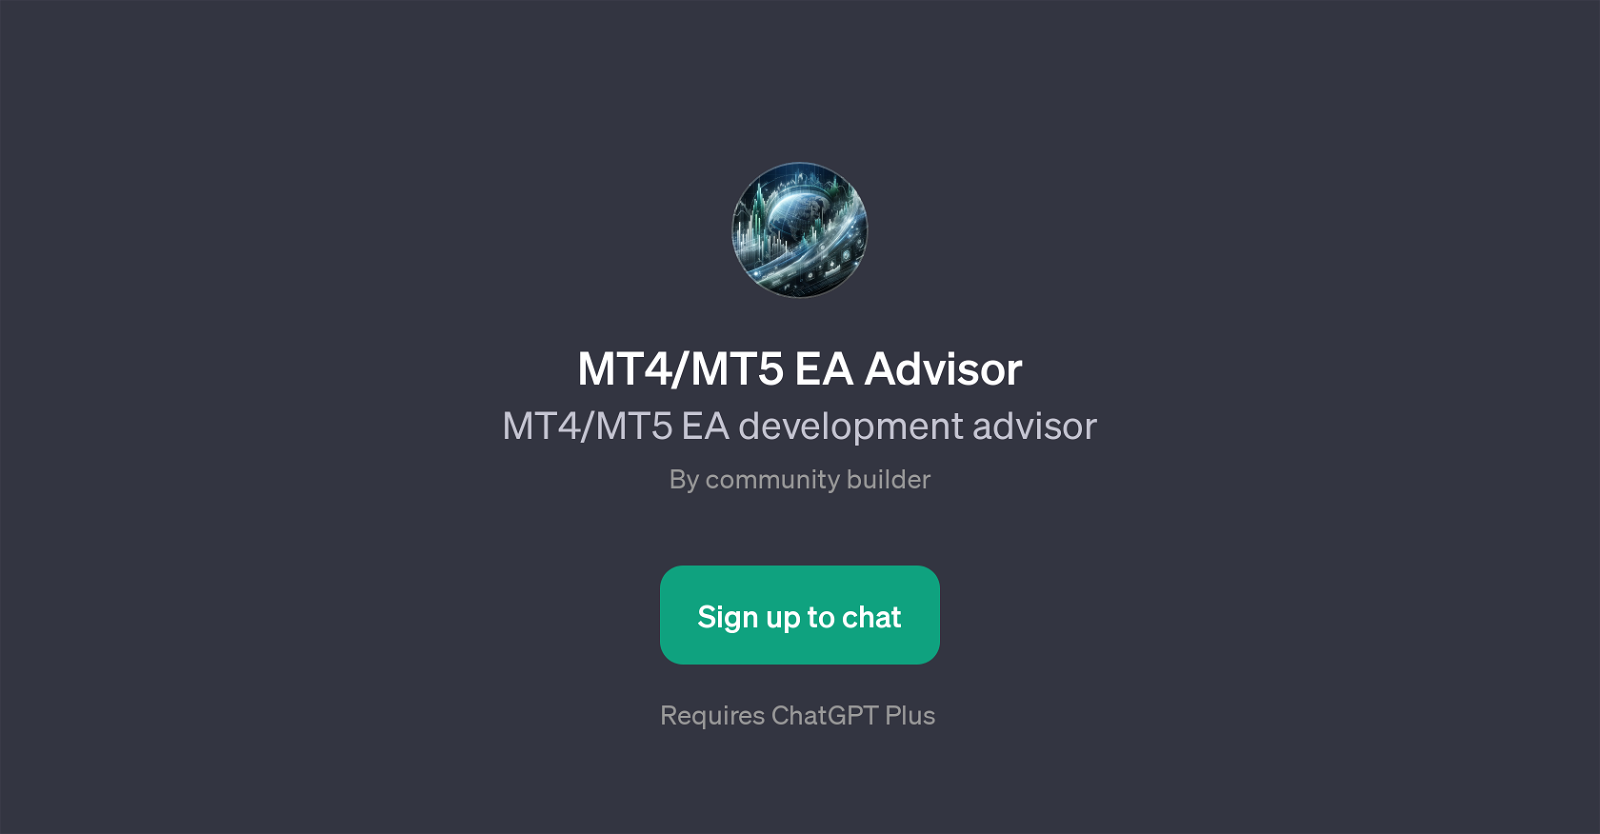 MT4/MT5 EA Advisor website